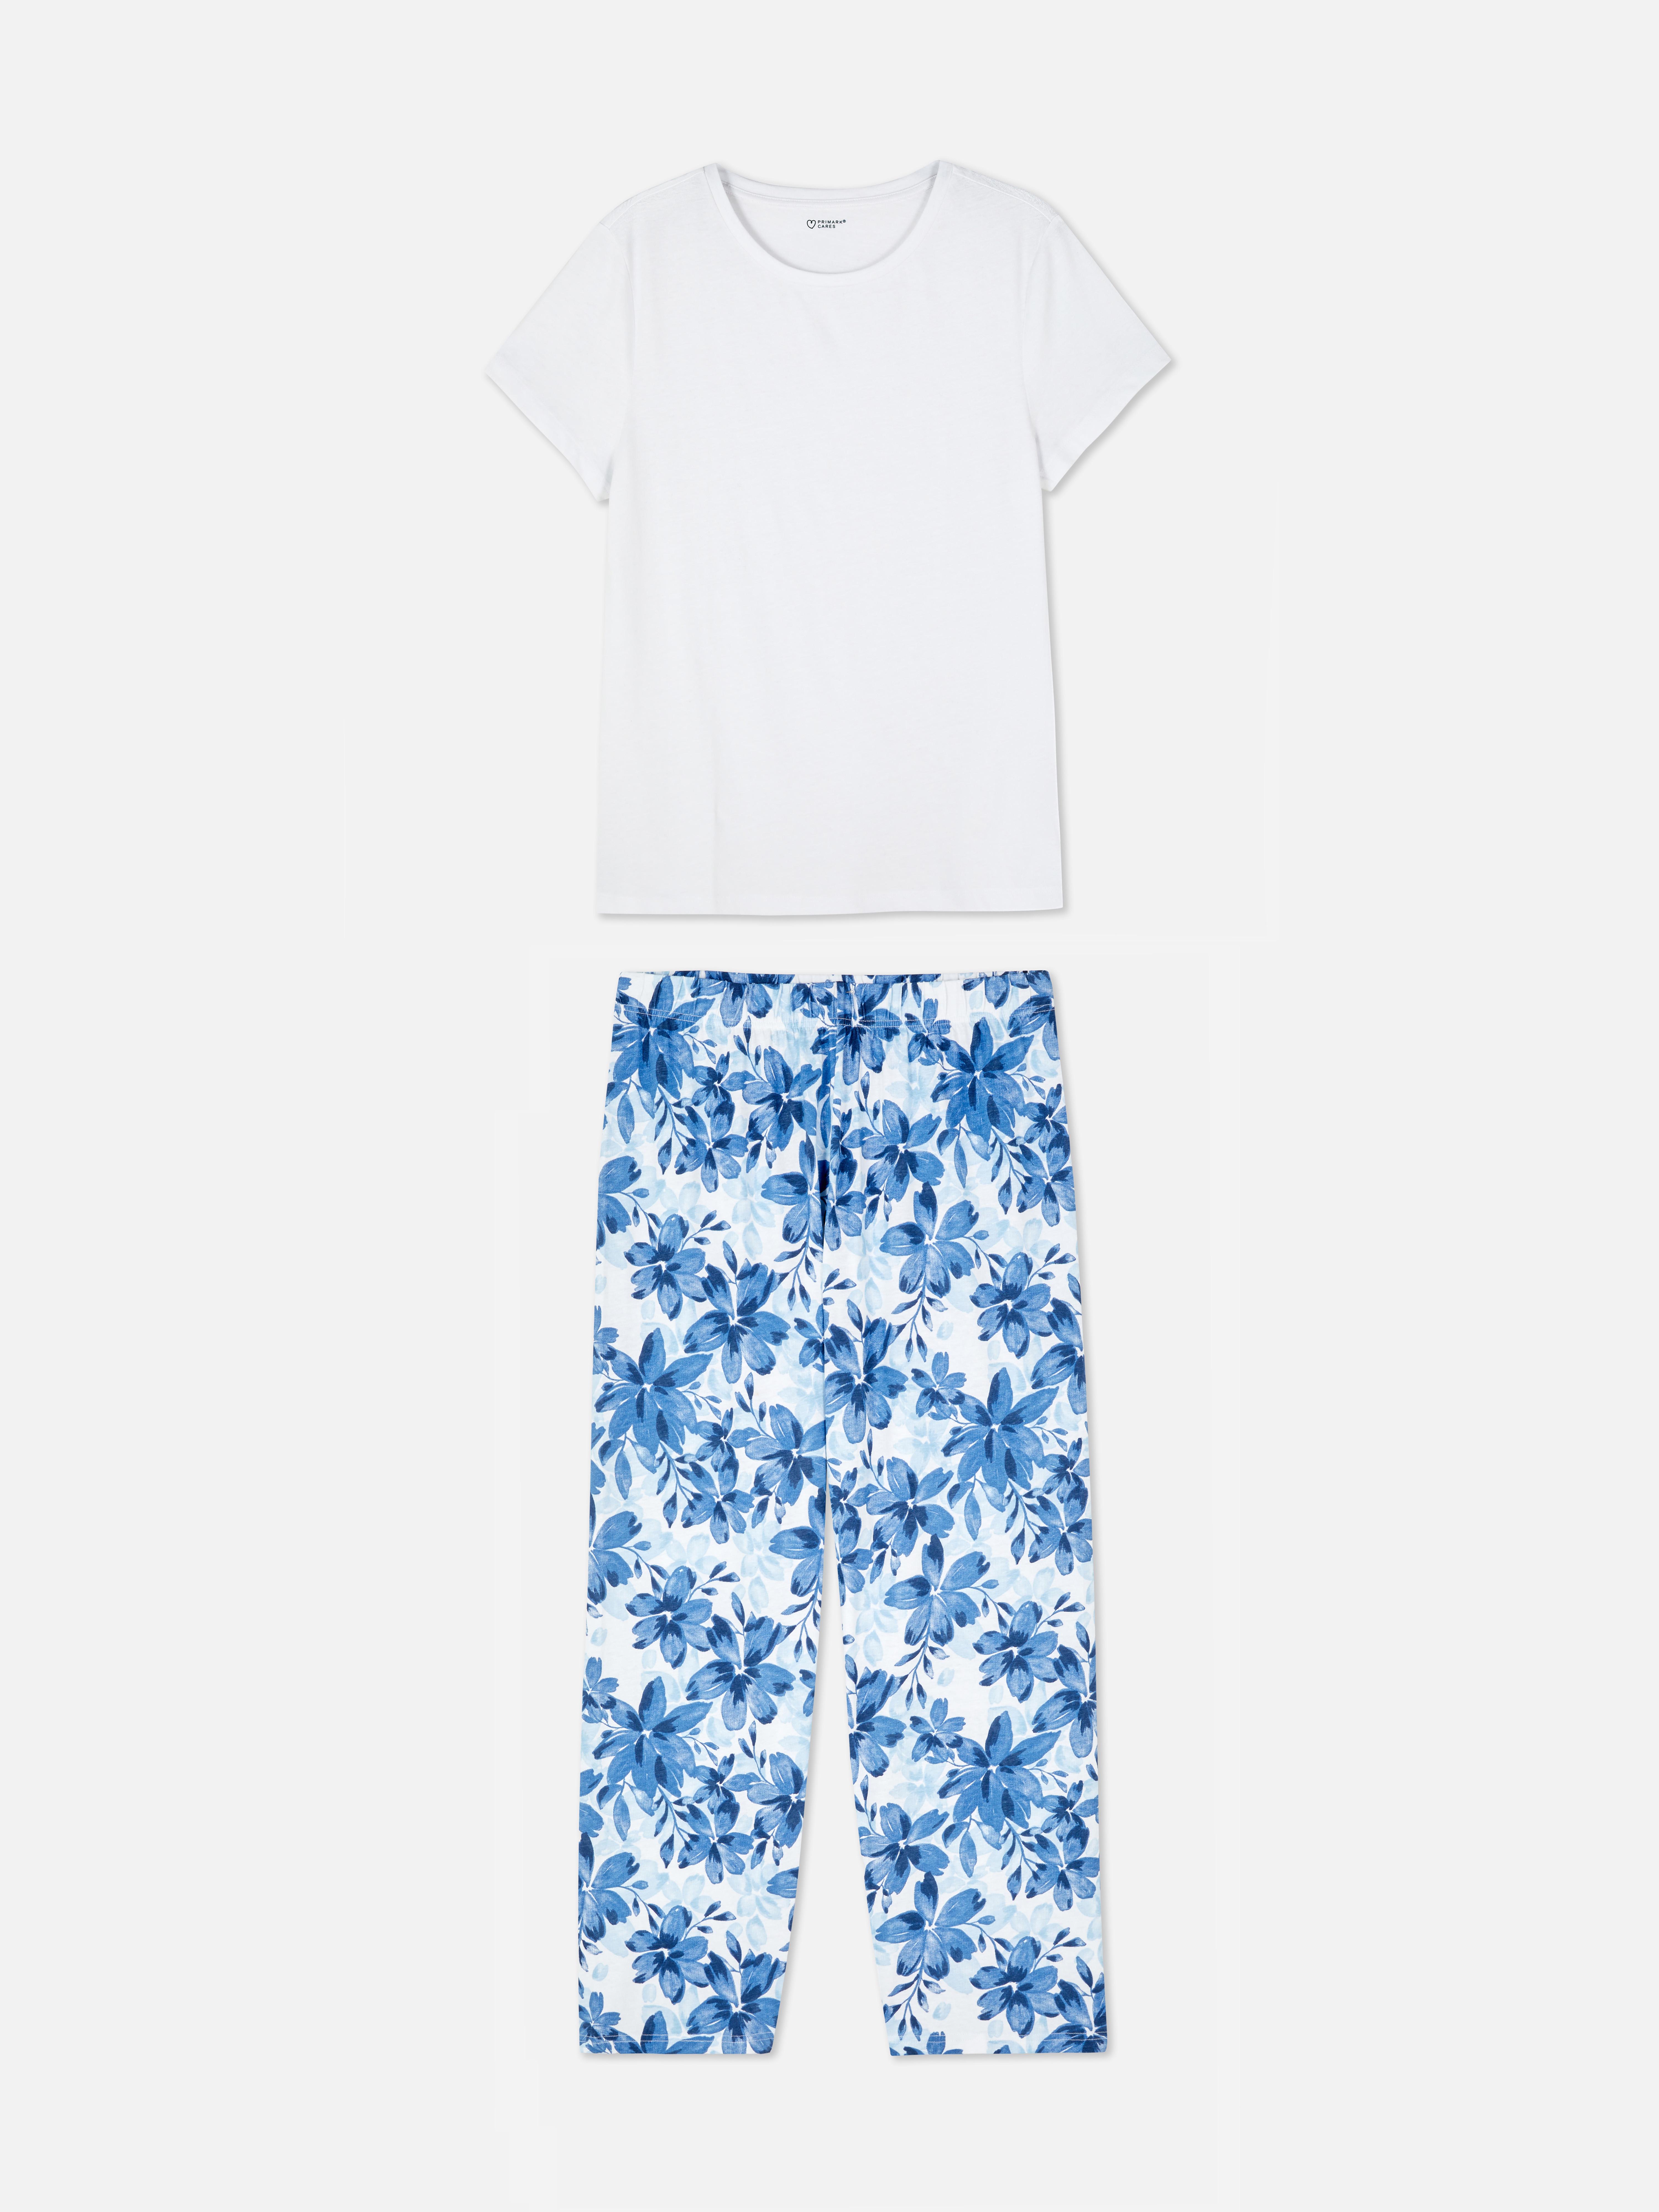 Primark Love To Lounge Blue Short Pyjama Pjs Set Size Medium